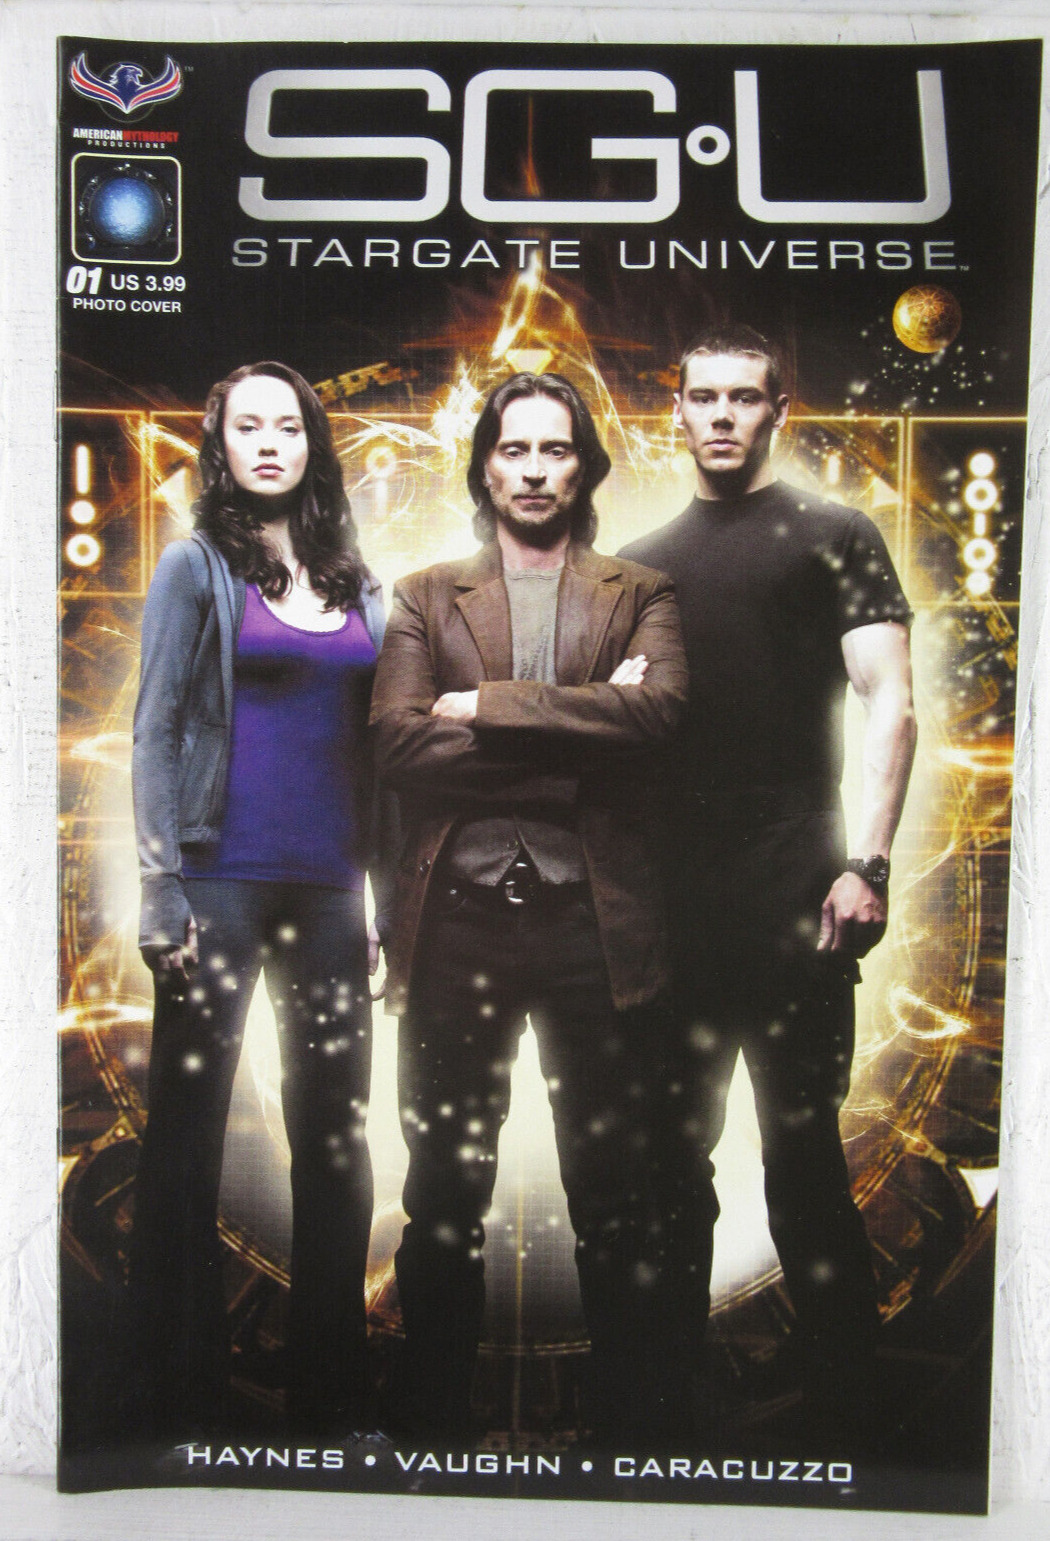 STARGATE UNIVERSE #1 * American Mythology Comics * Comic Book - SGU 2009